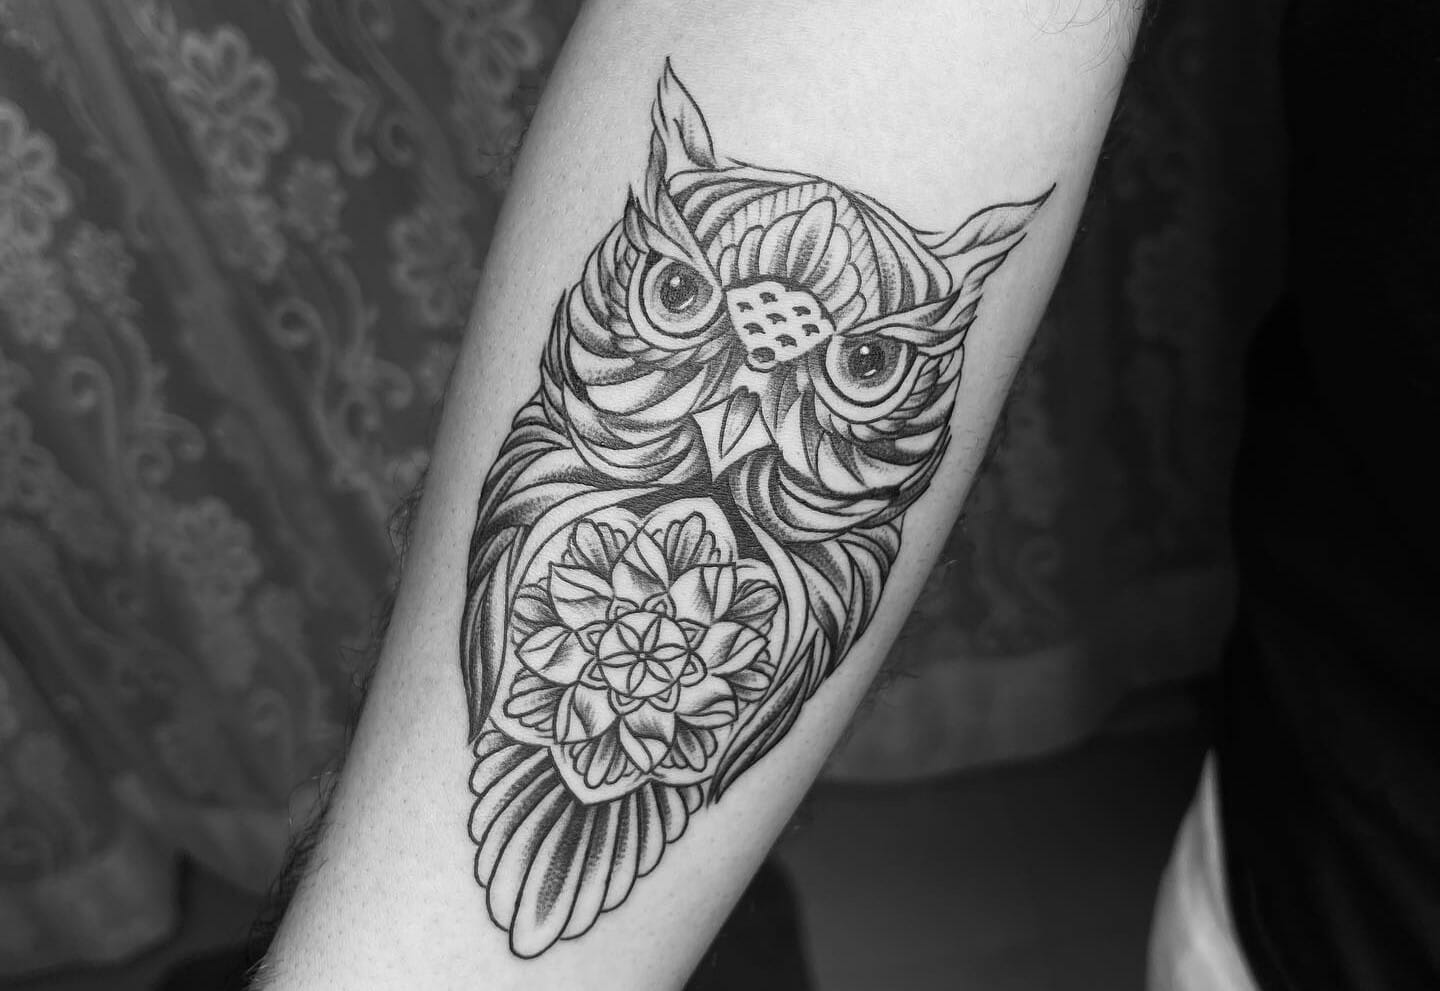 Tattoos in Dénia - As Meigas Tattoo & Piercing - owl lines - Dénia.com